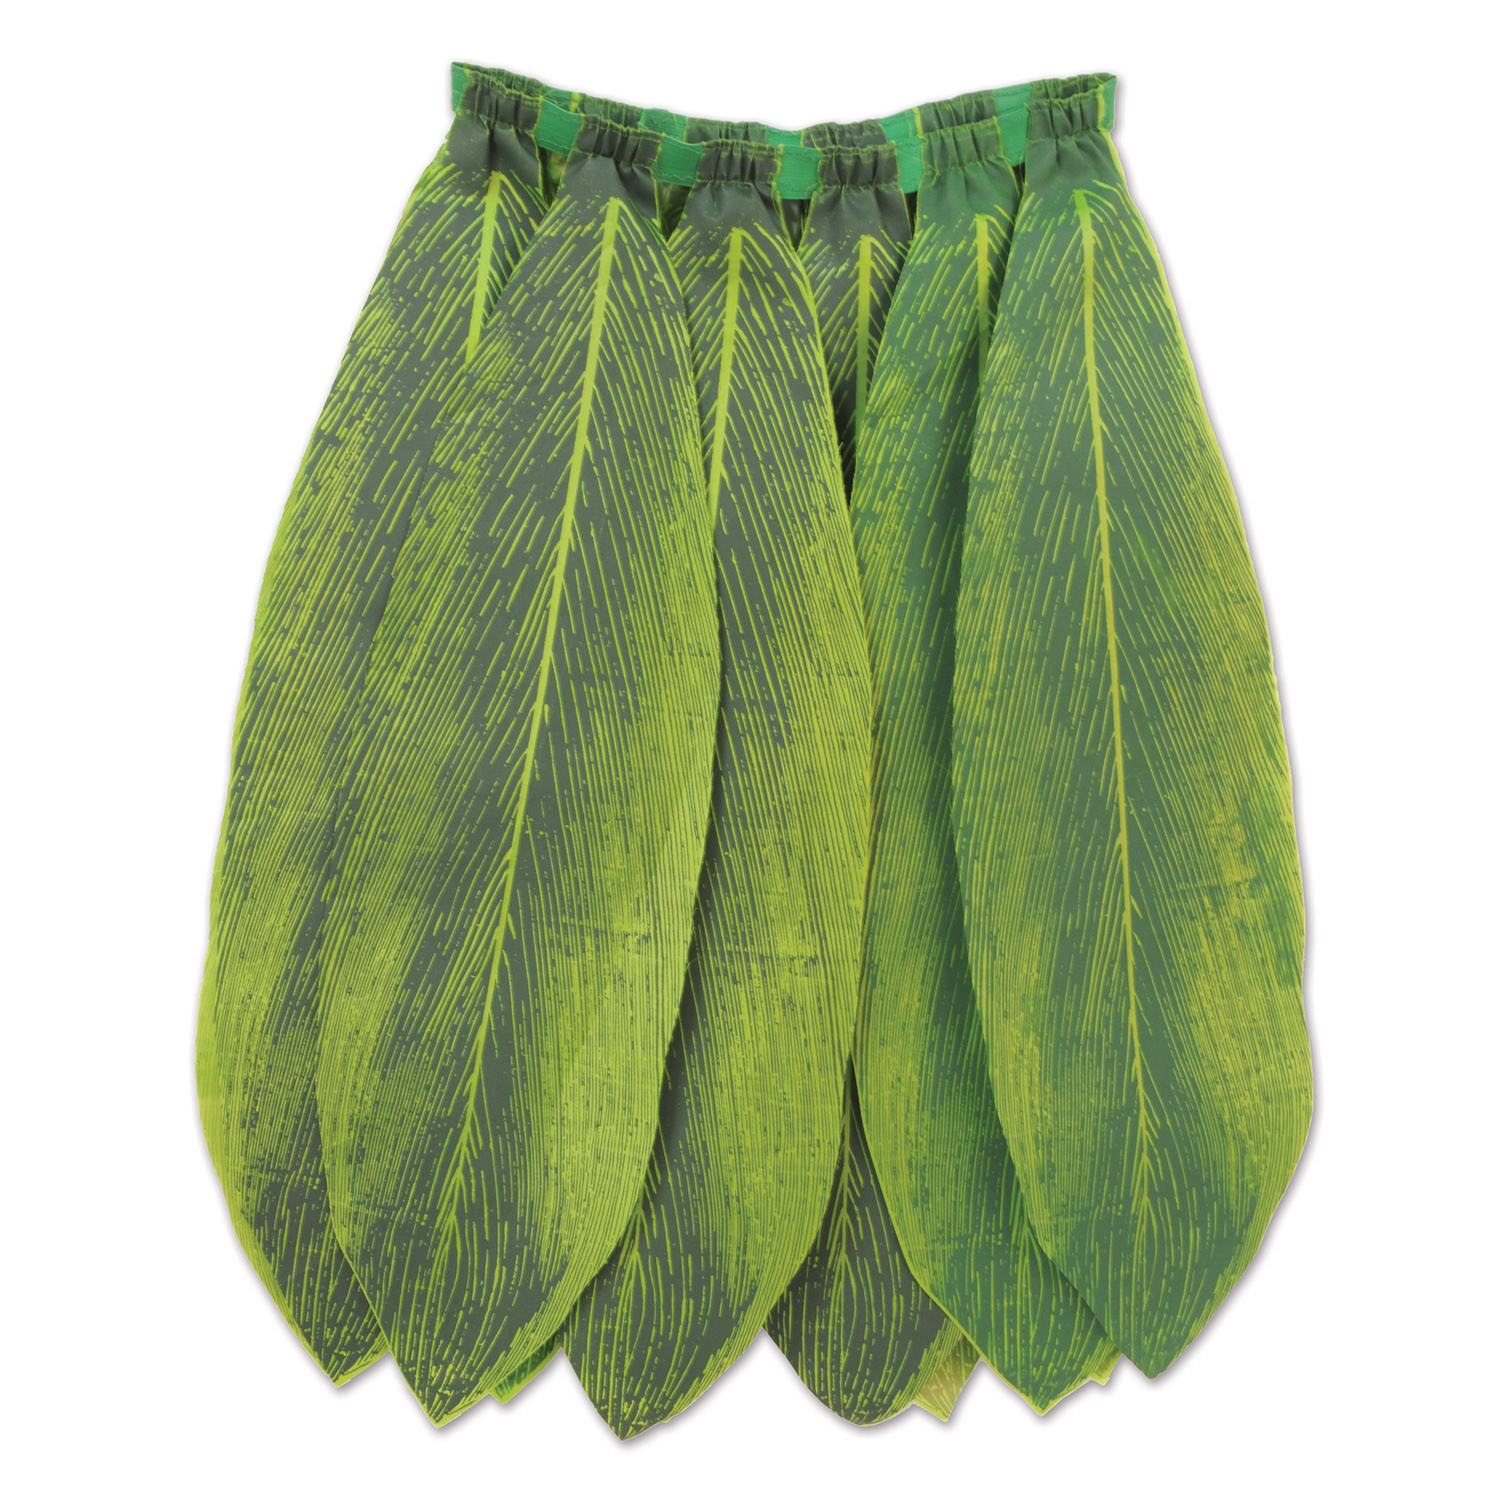 skirt that looks like large green tea leaves